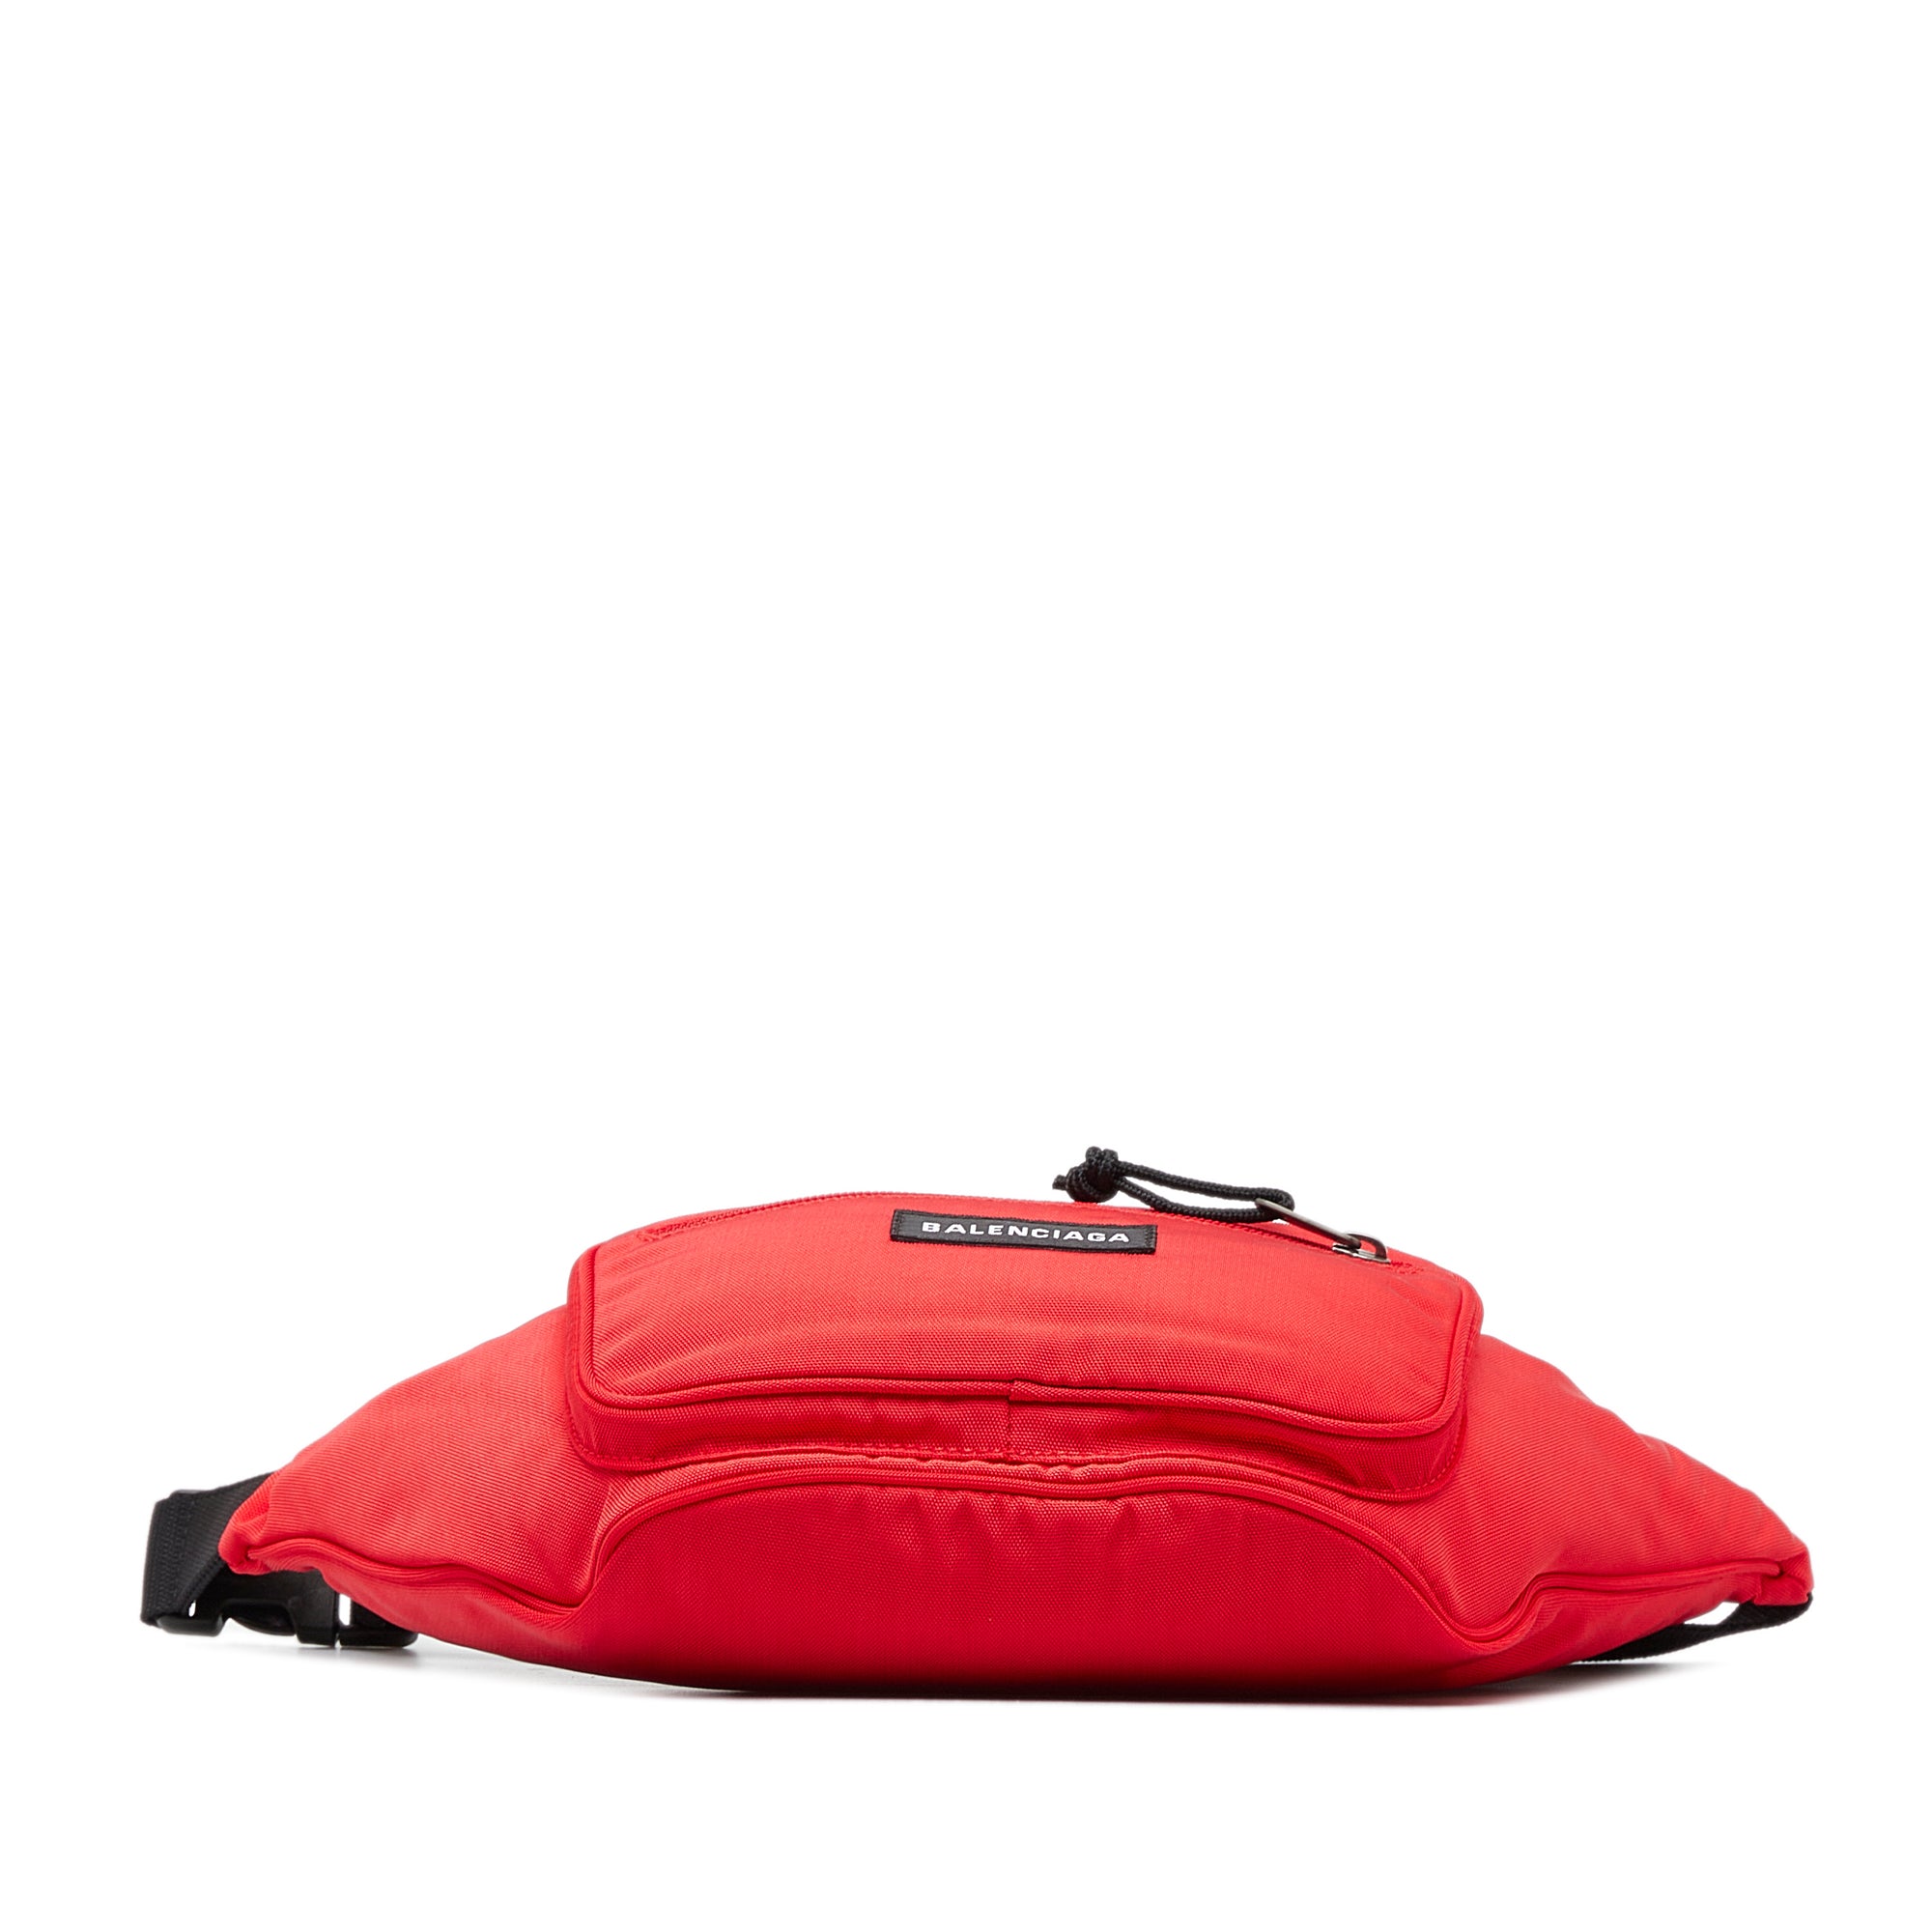 Luxury bag - Balenciaga Explorer belt bag in red nylon